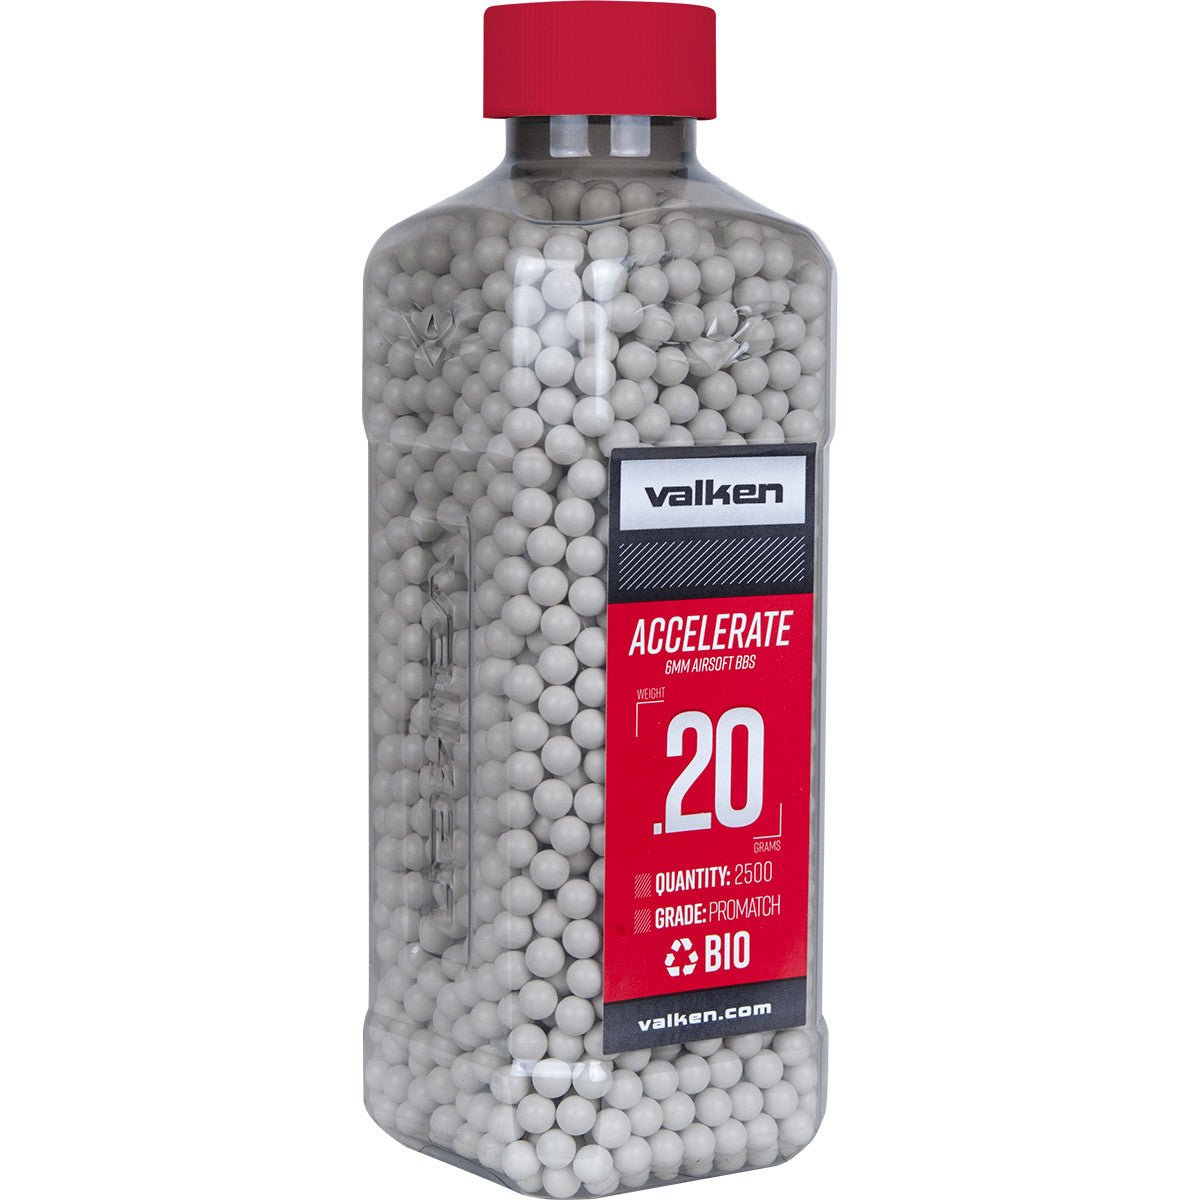 Valken ACCELERATE 0.20g Bio BBs 2500 Count Bottle - White - Valken Paintball